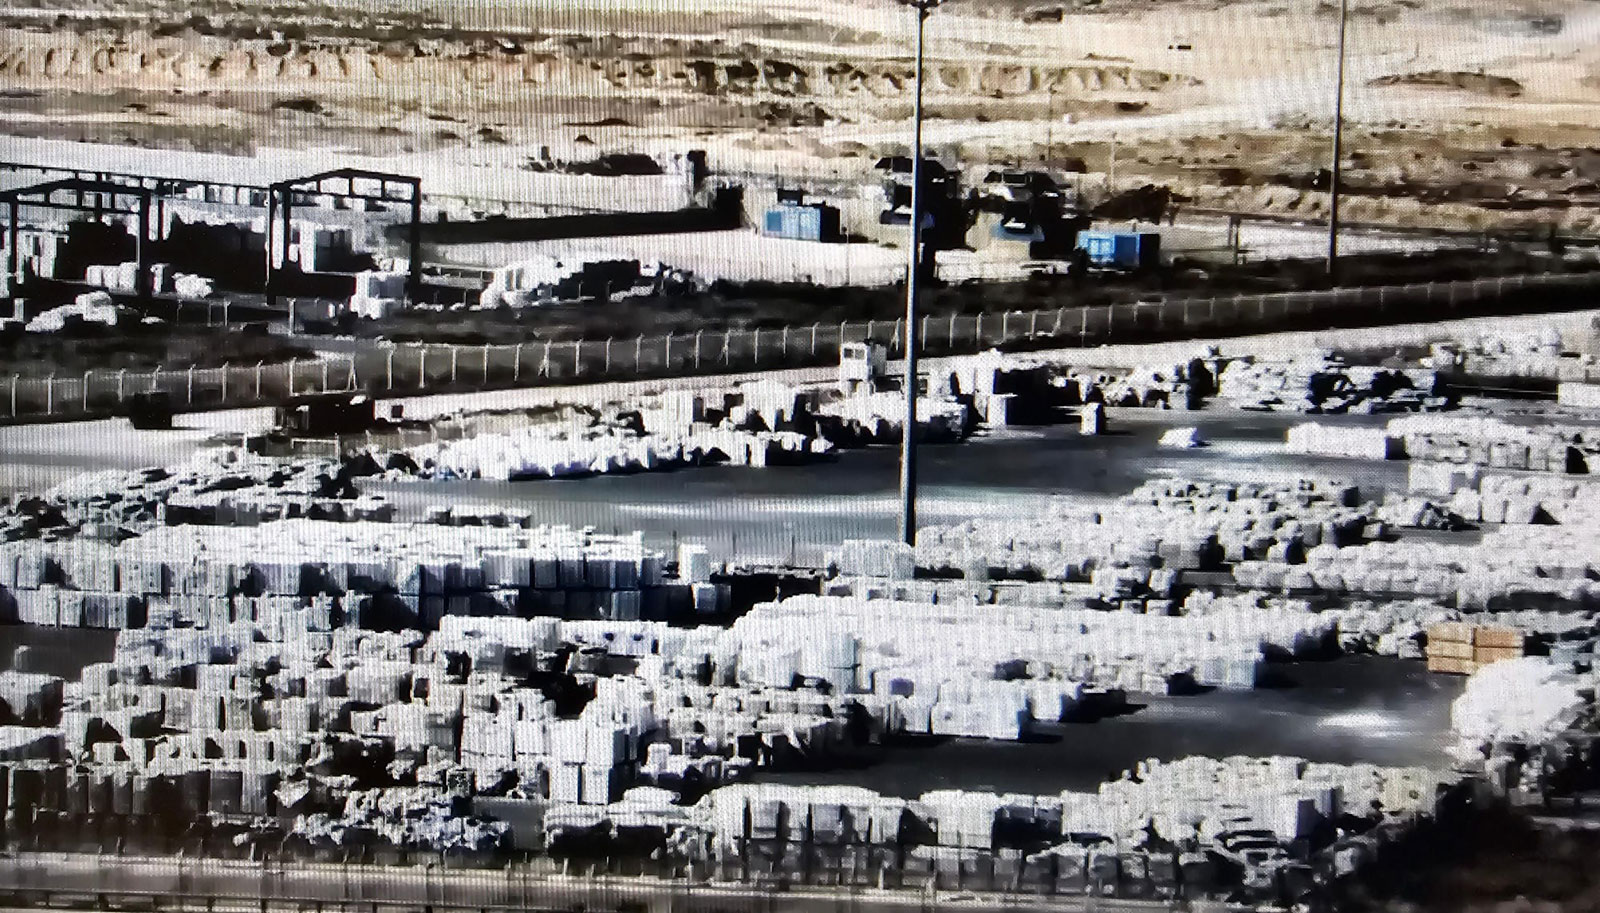 1,000 truckloads of aid for Gaza stranded at Kerem Shalom crossing, Israel says